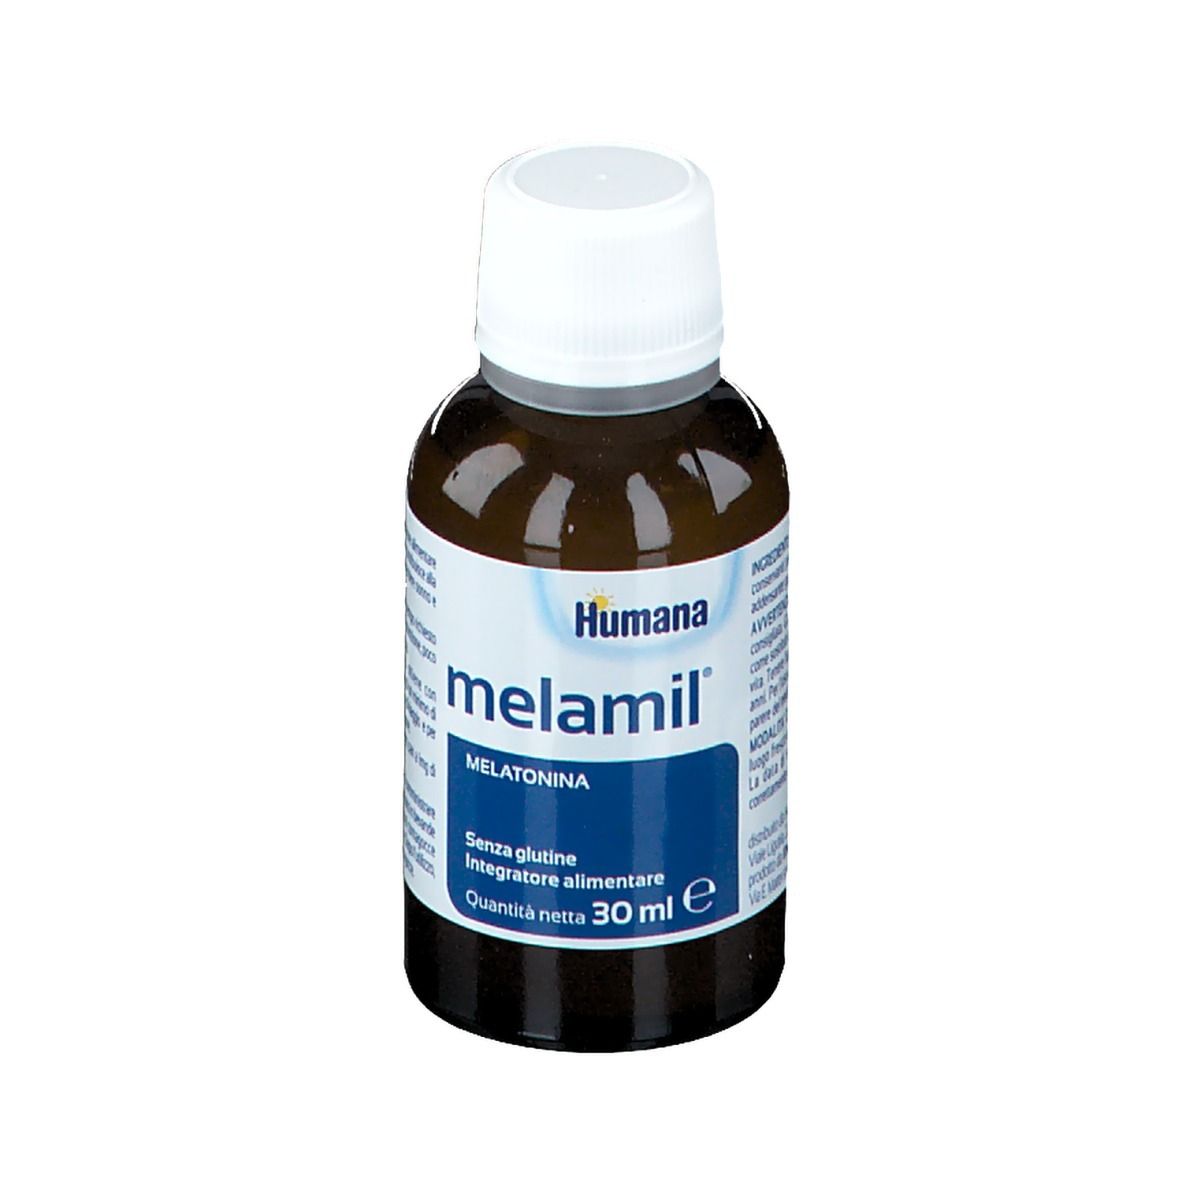 Humana Melamil® Melatonina